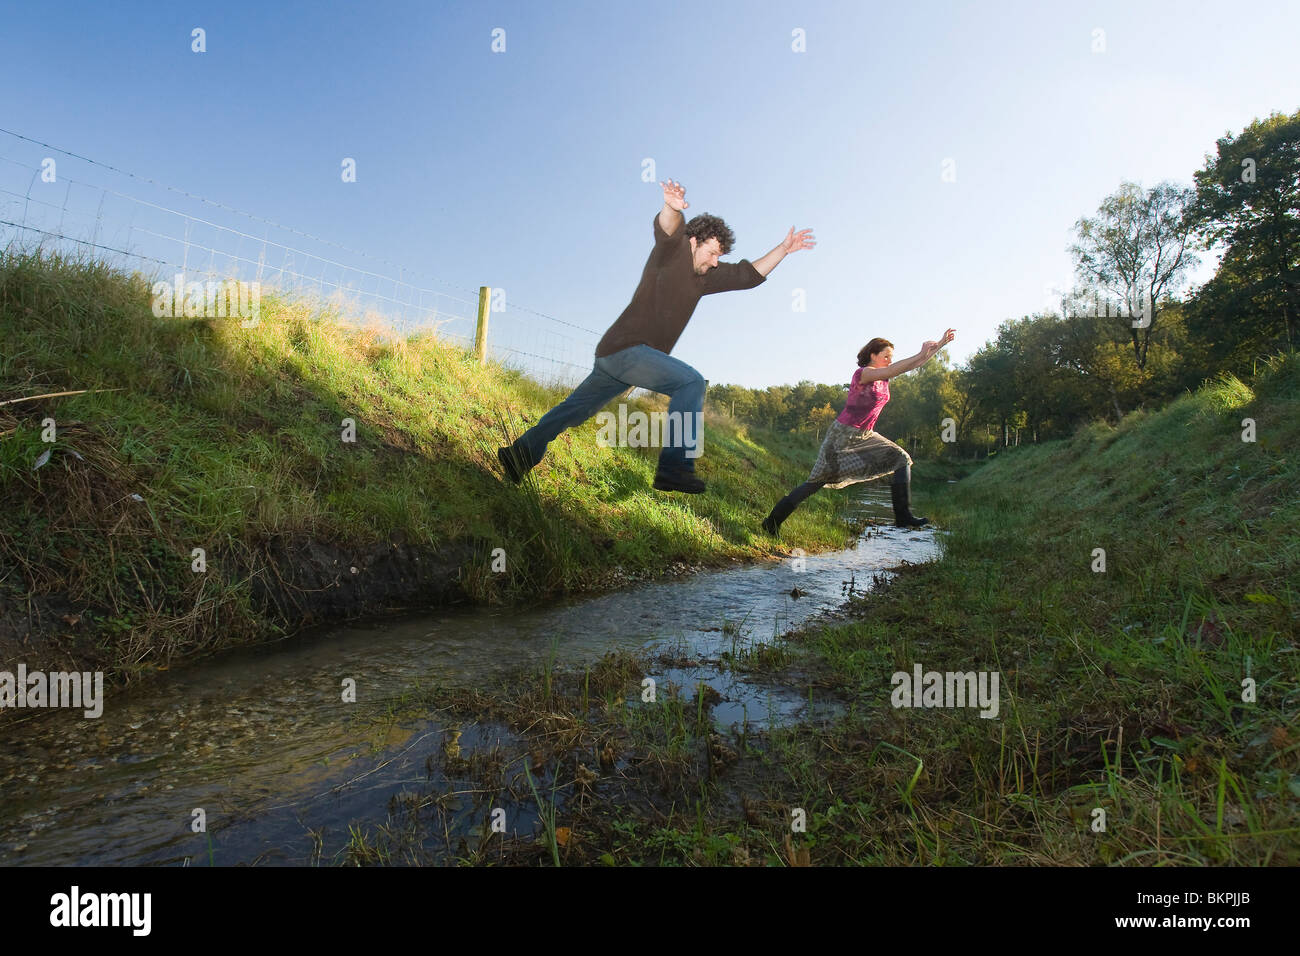 Man en vrouw springen over een slootje. Man and woman jumping over ditch. Ruben Smit Digital Image Archive Stock Photo